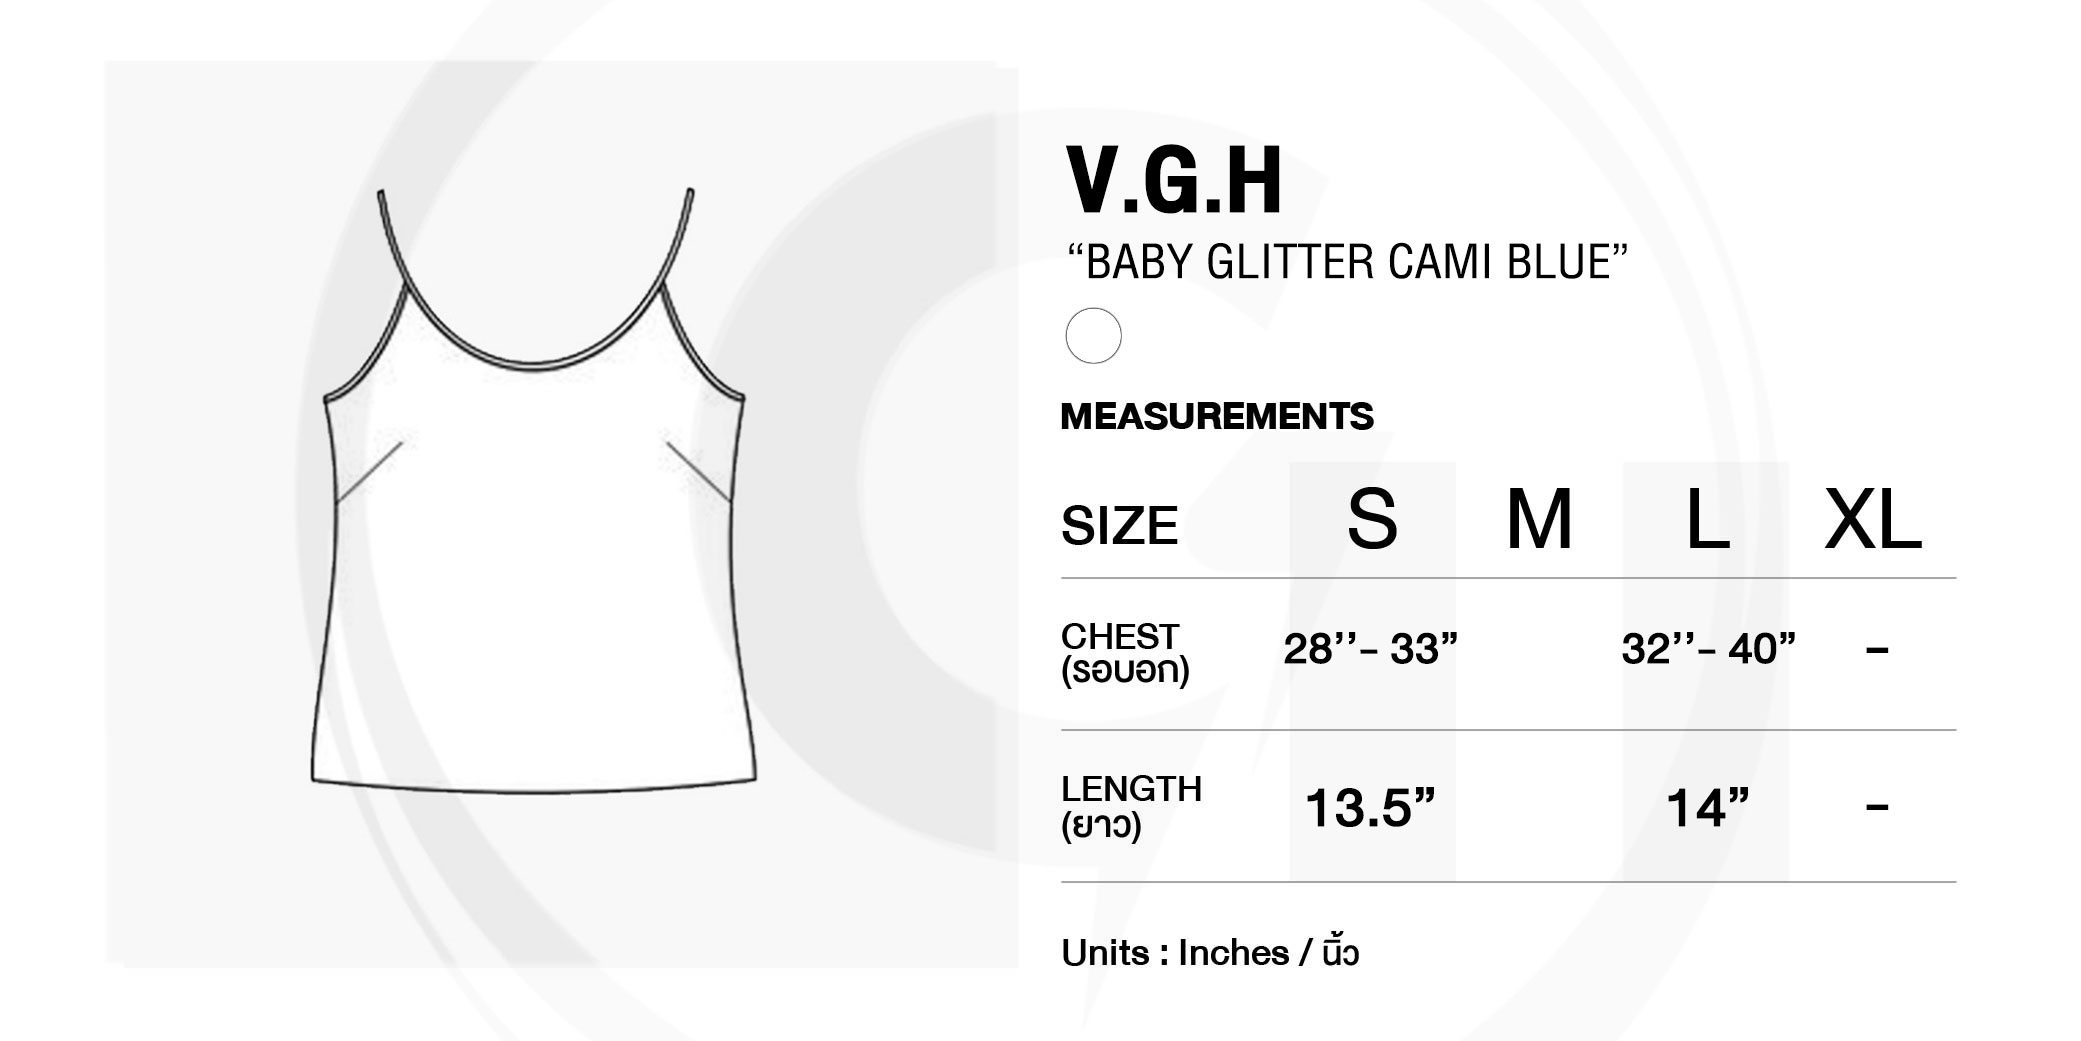 V.G.H BABY GLITTER CAMI BLUE